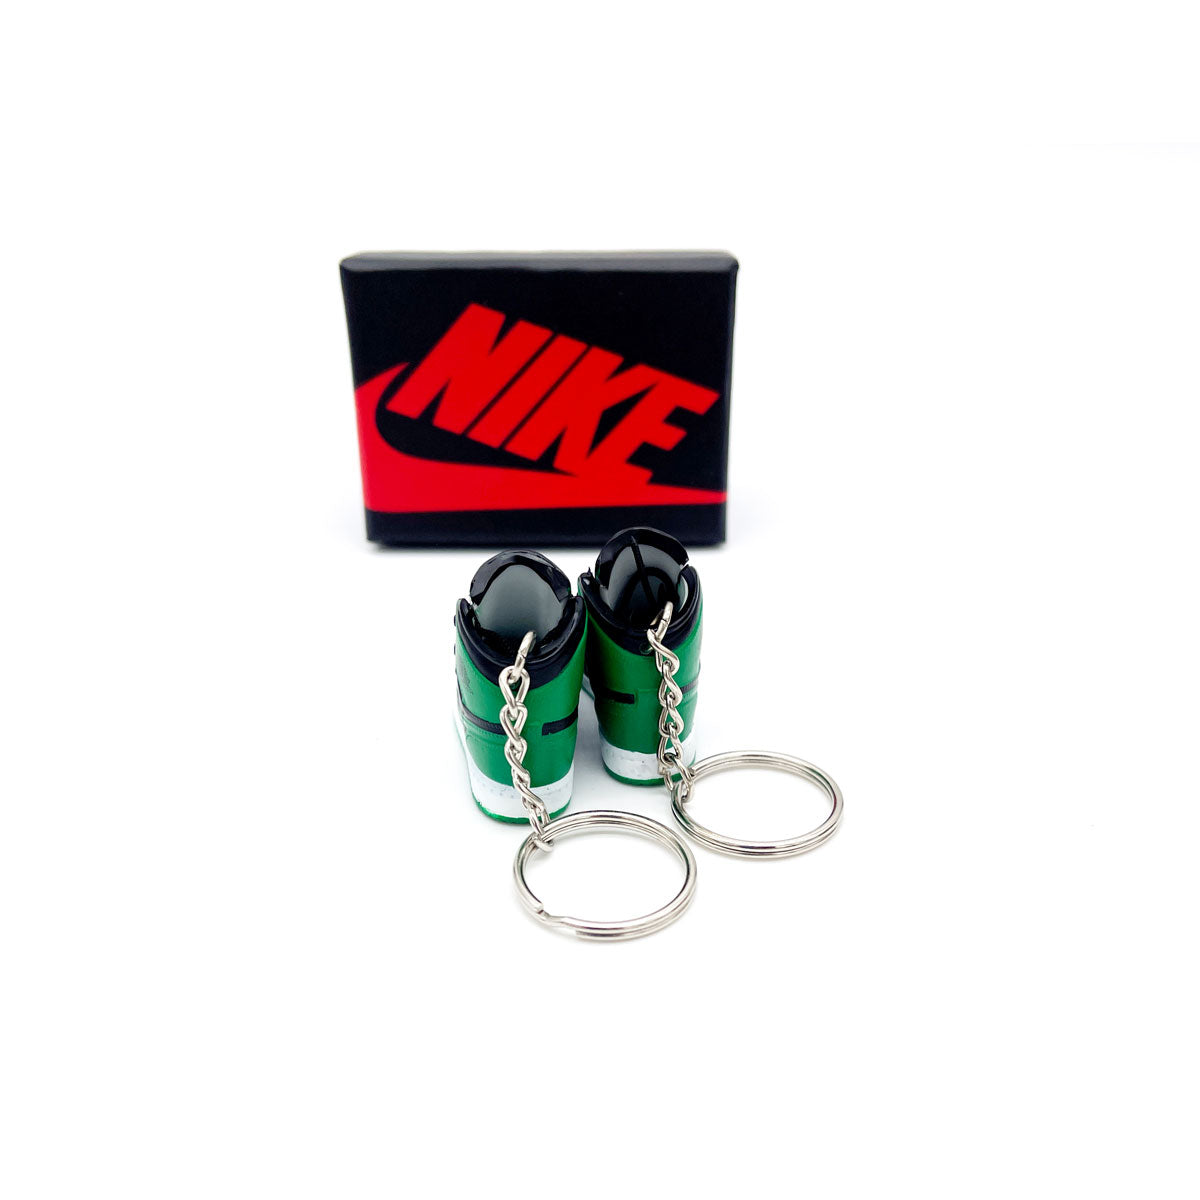 3D Sneaker Keychain- Air Jordan 1 Pine Green 2.0 Pair